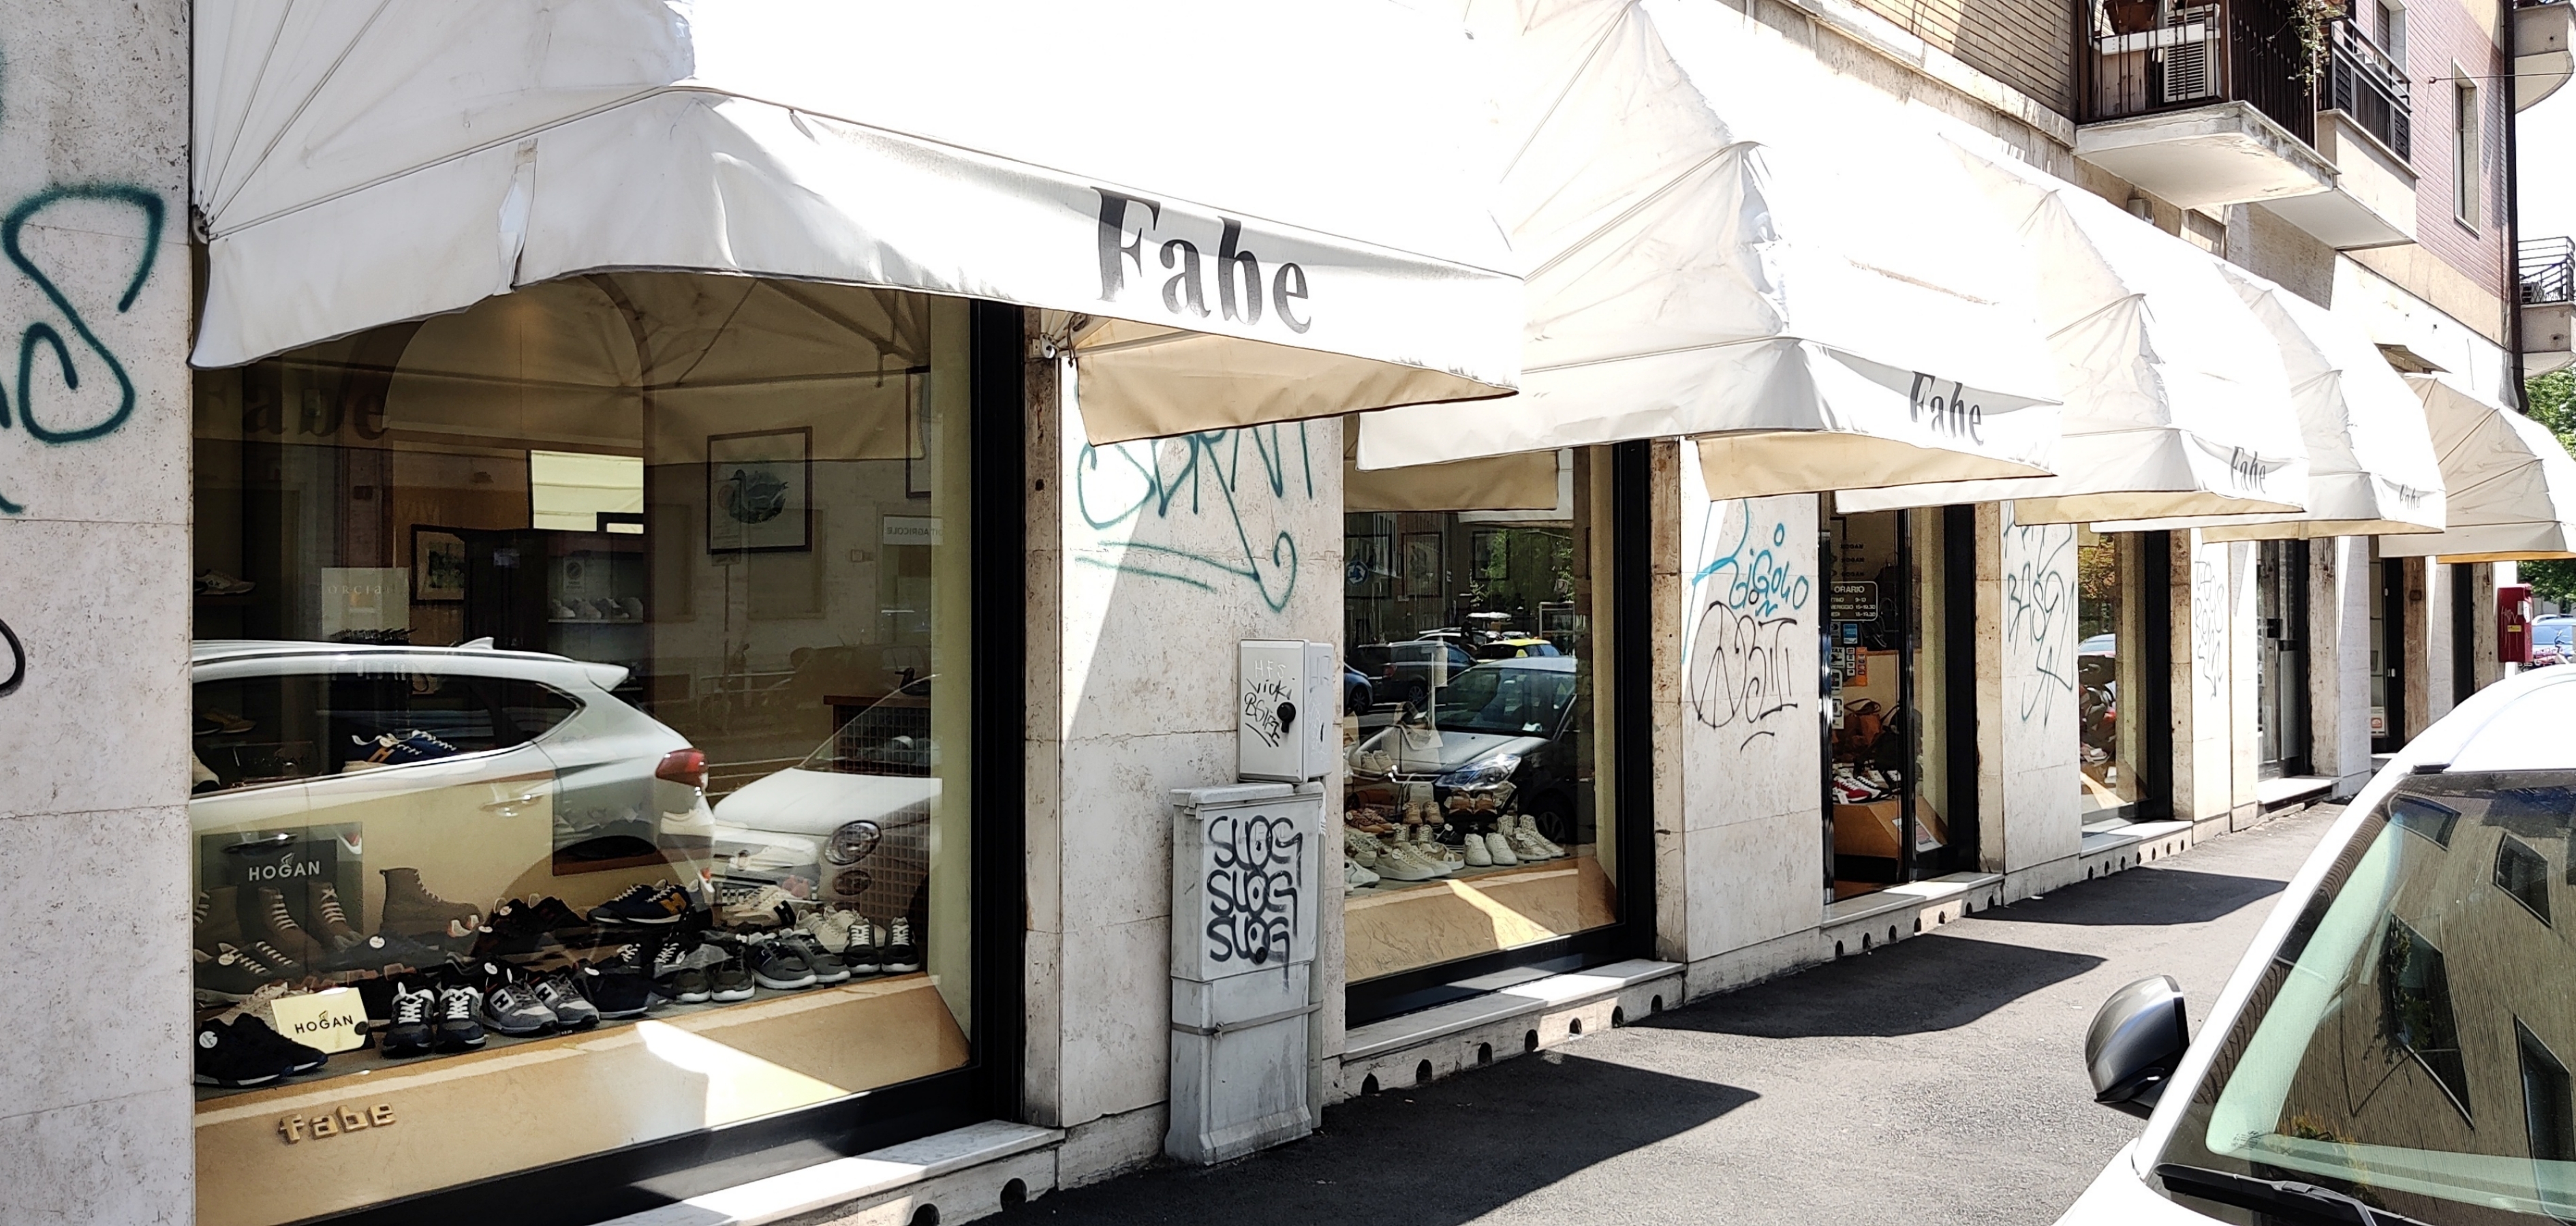 Doucal's Official Store - Calzature Fabe negozi Saucony Sun68 Hogan Mou Ash e i migliori marchi VIa Carlo Dolci 4 a Milano